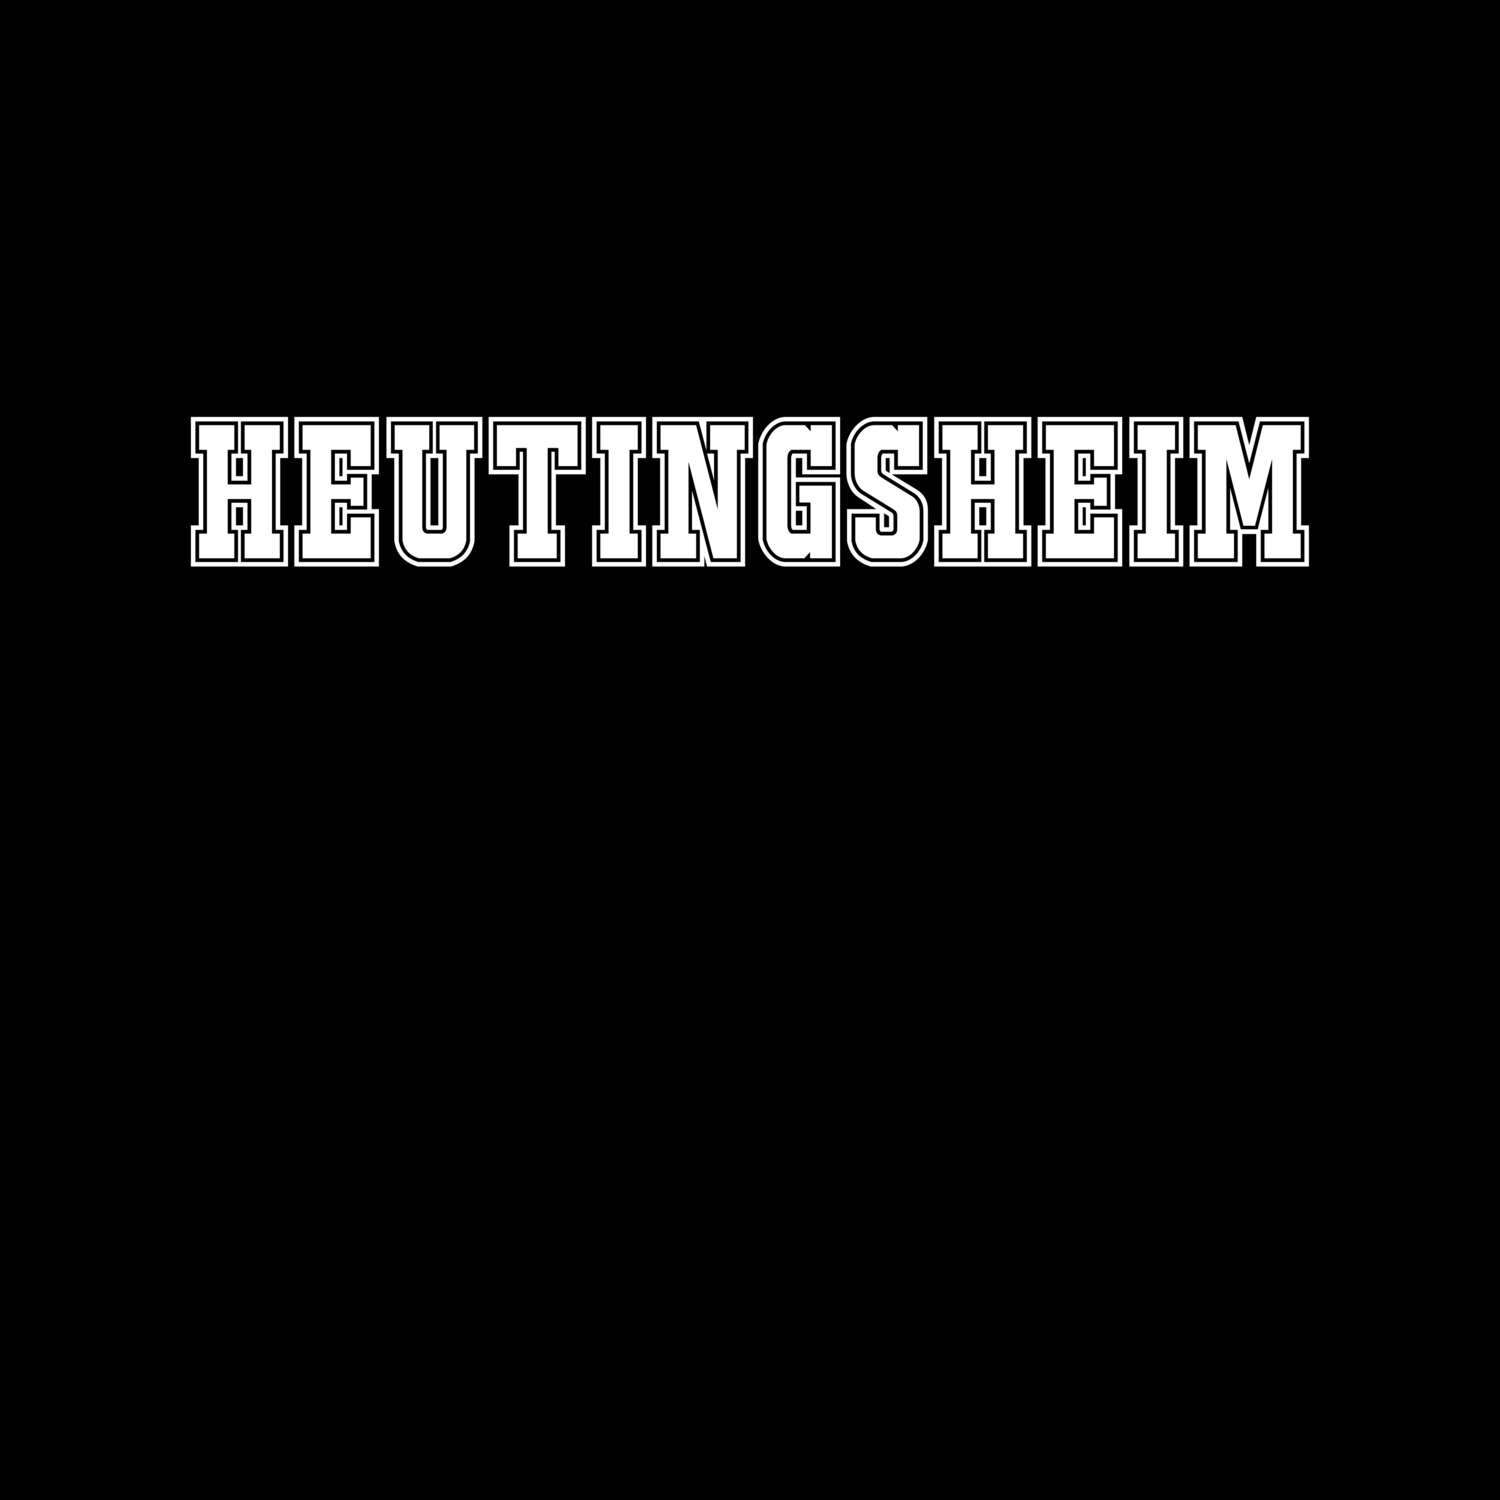 Heutingsheim T-Shirt »Classic«